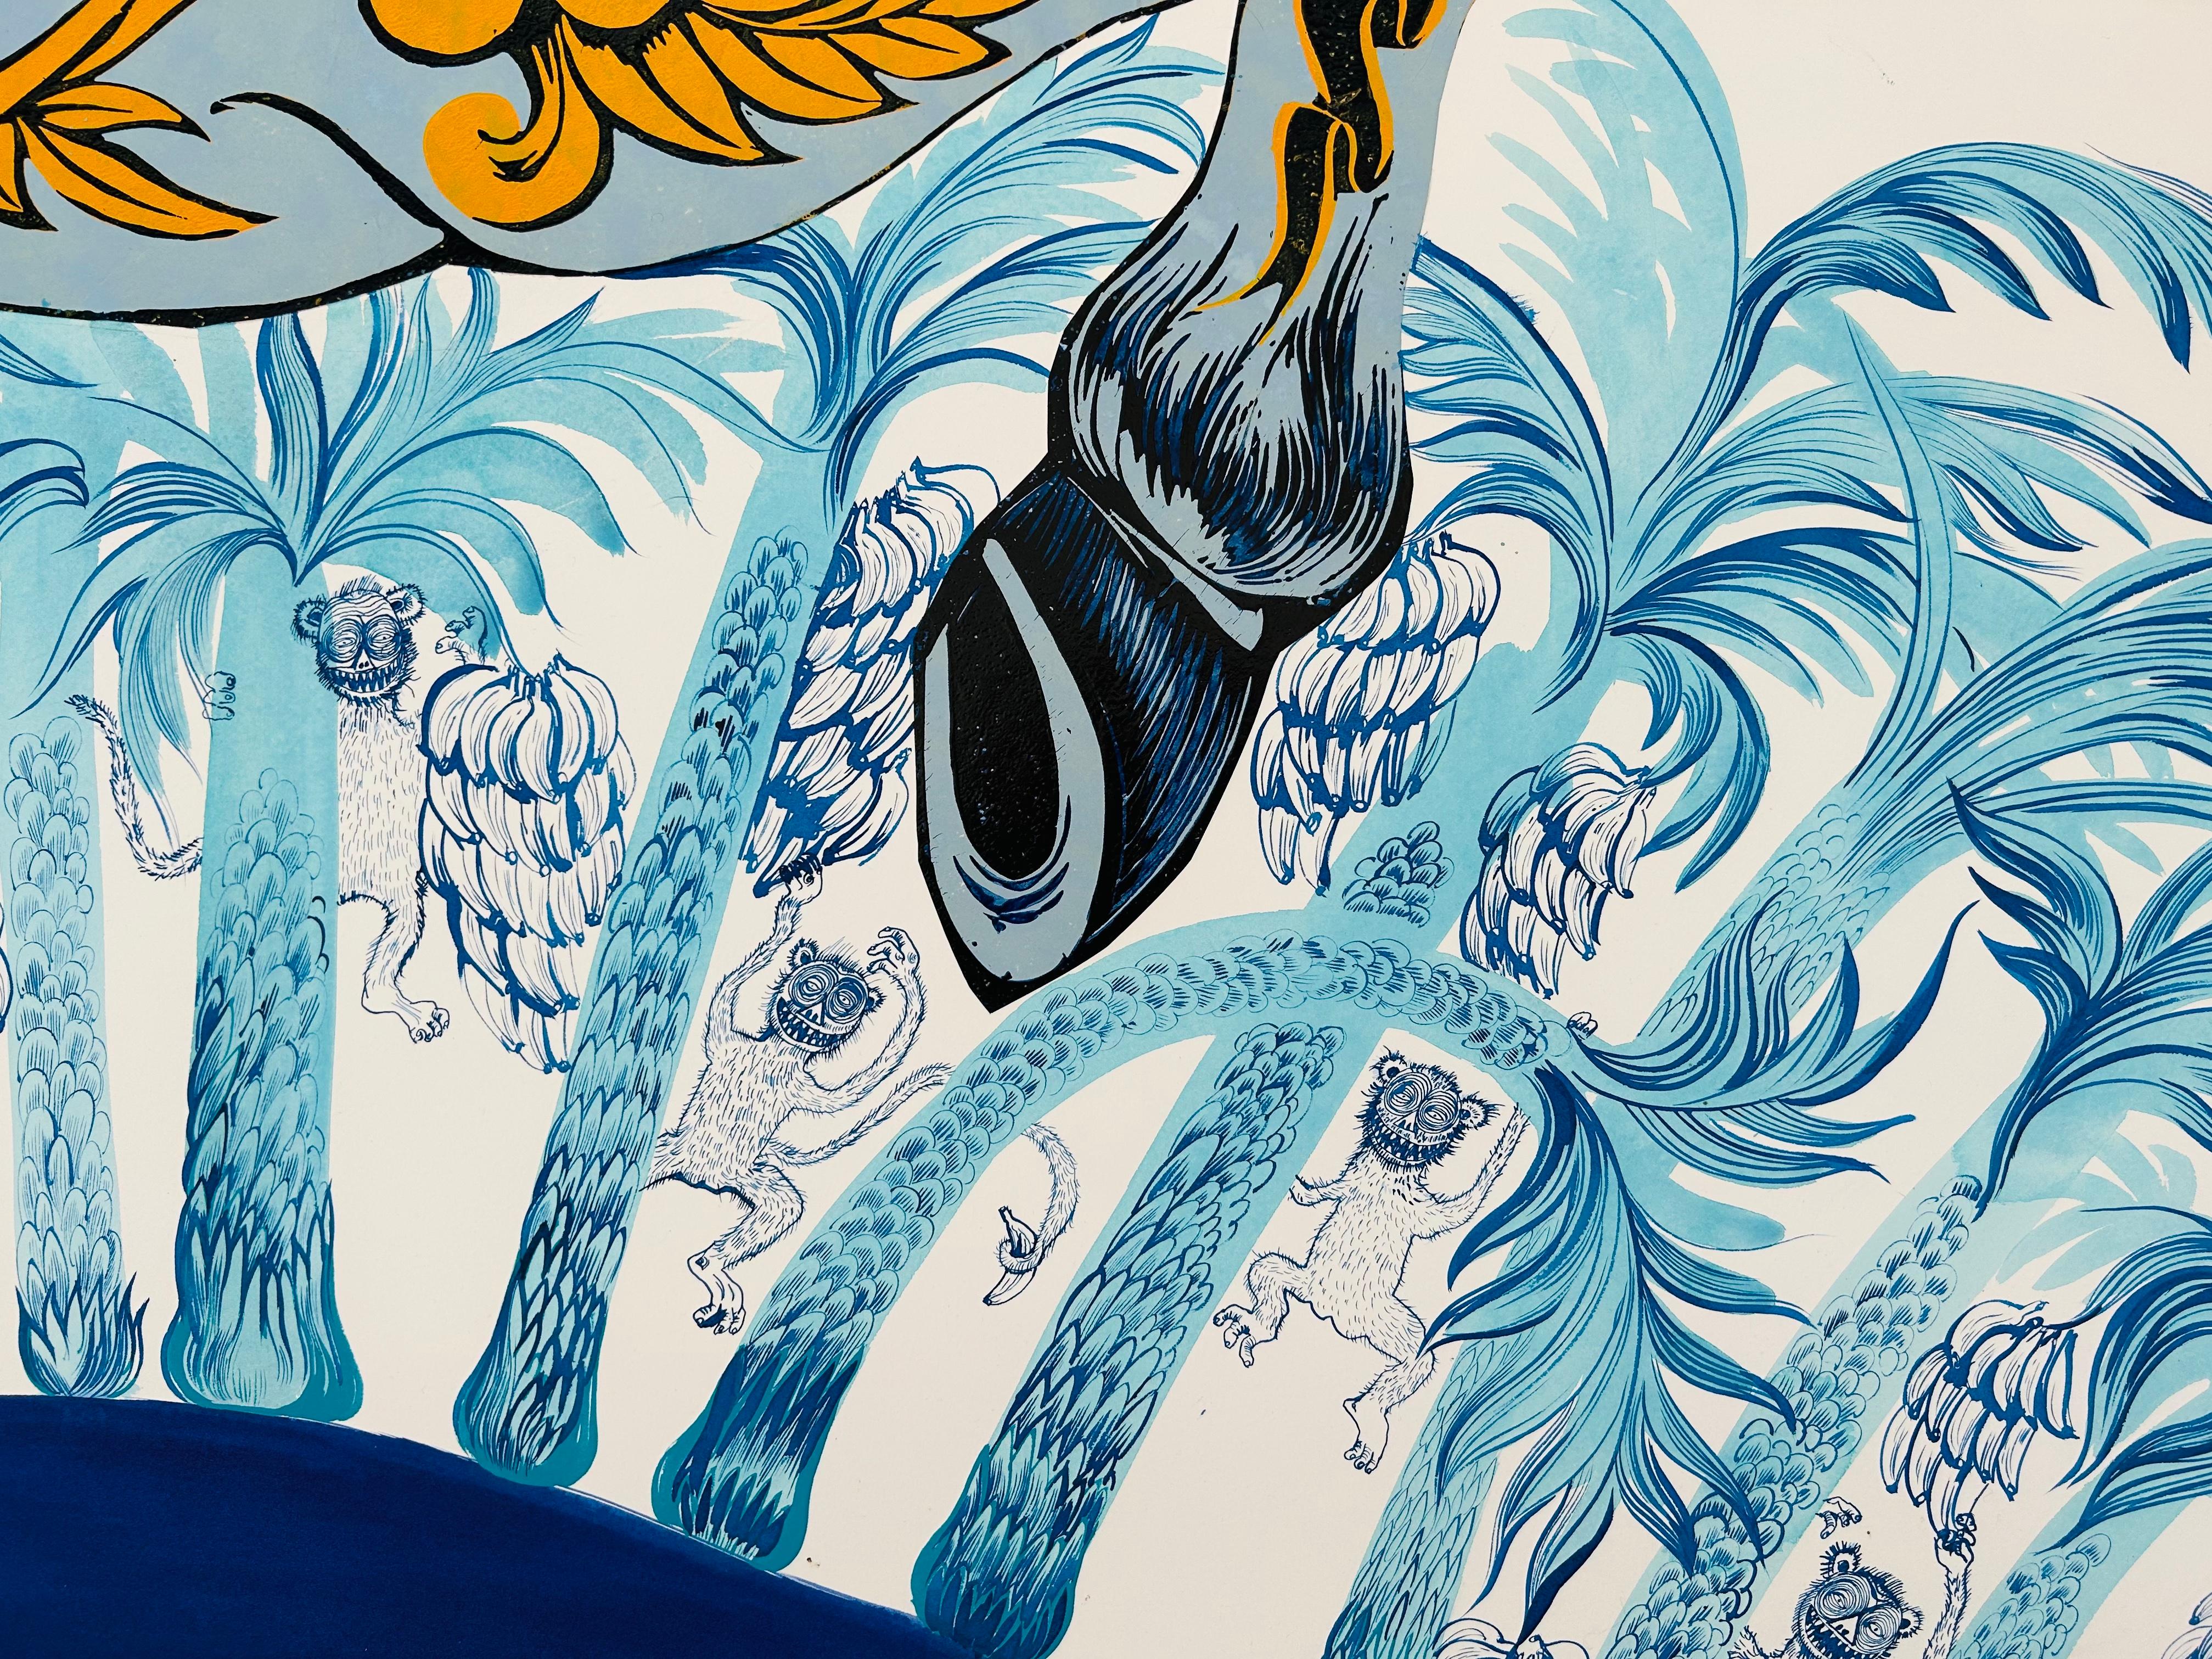  Surrealist Large Painting Royal College Art LGBTQ+ Artist Horse Blue Palm Trees 4